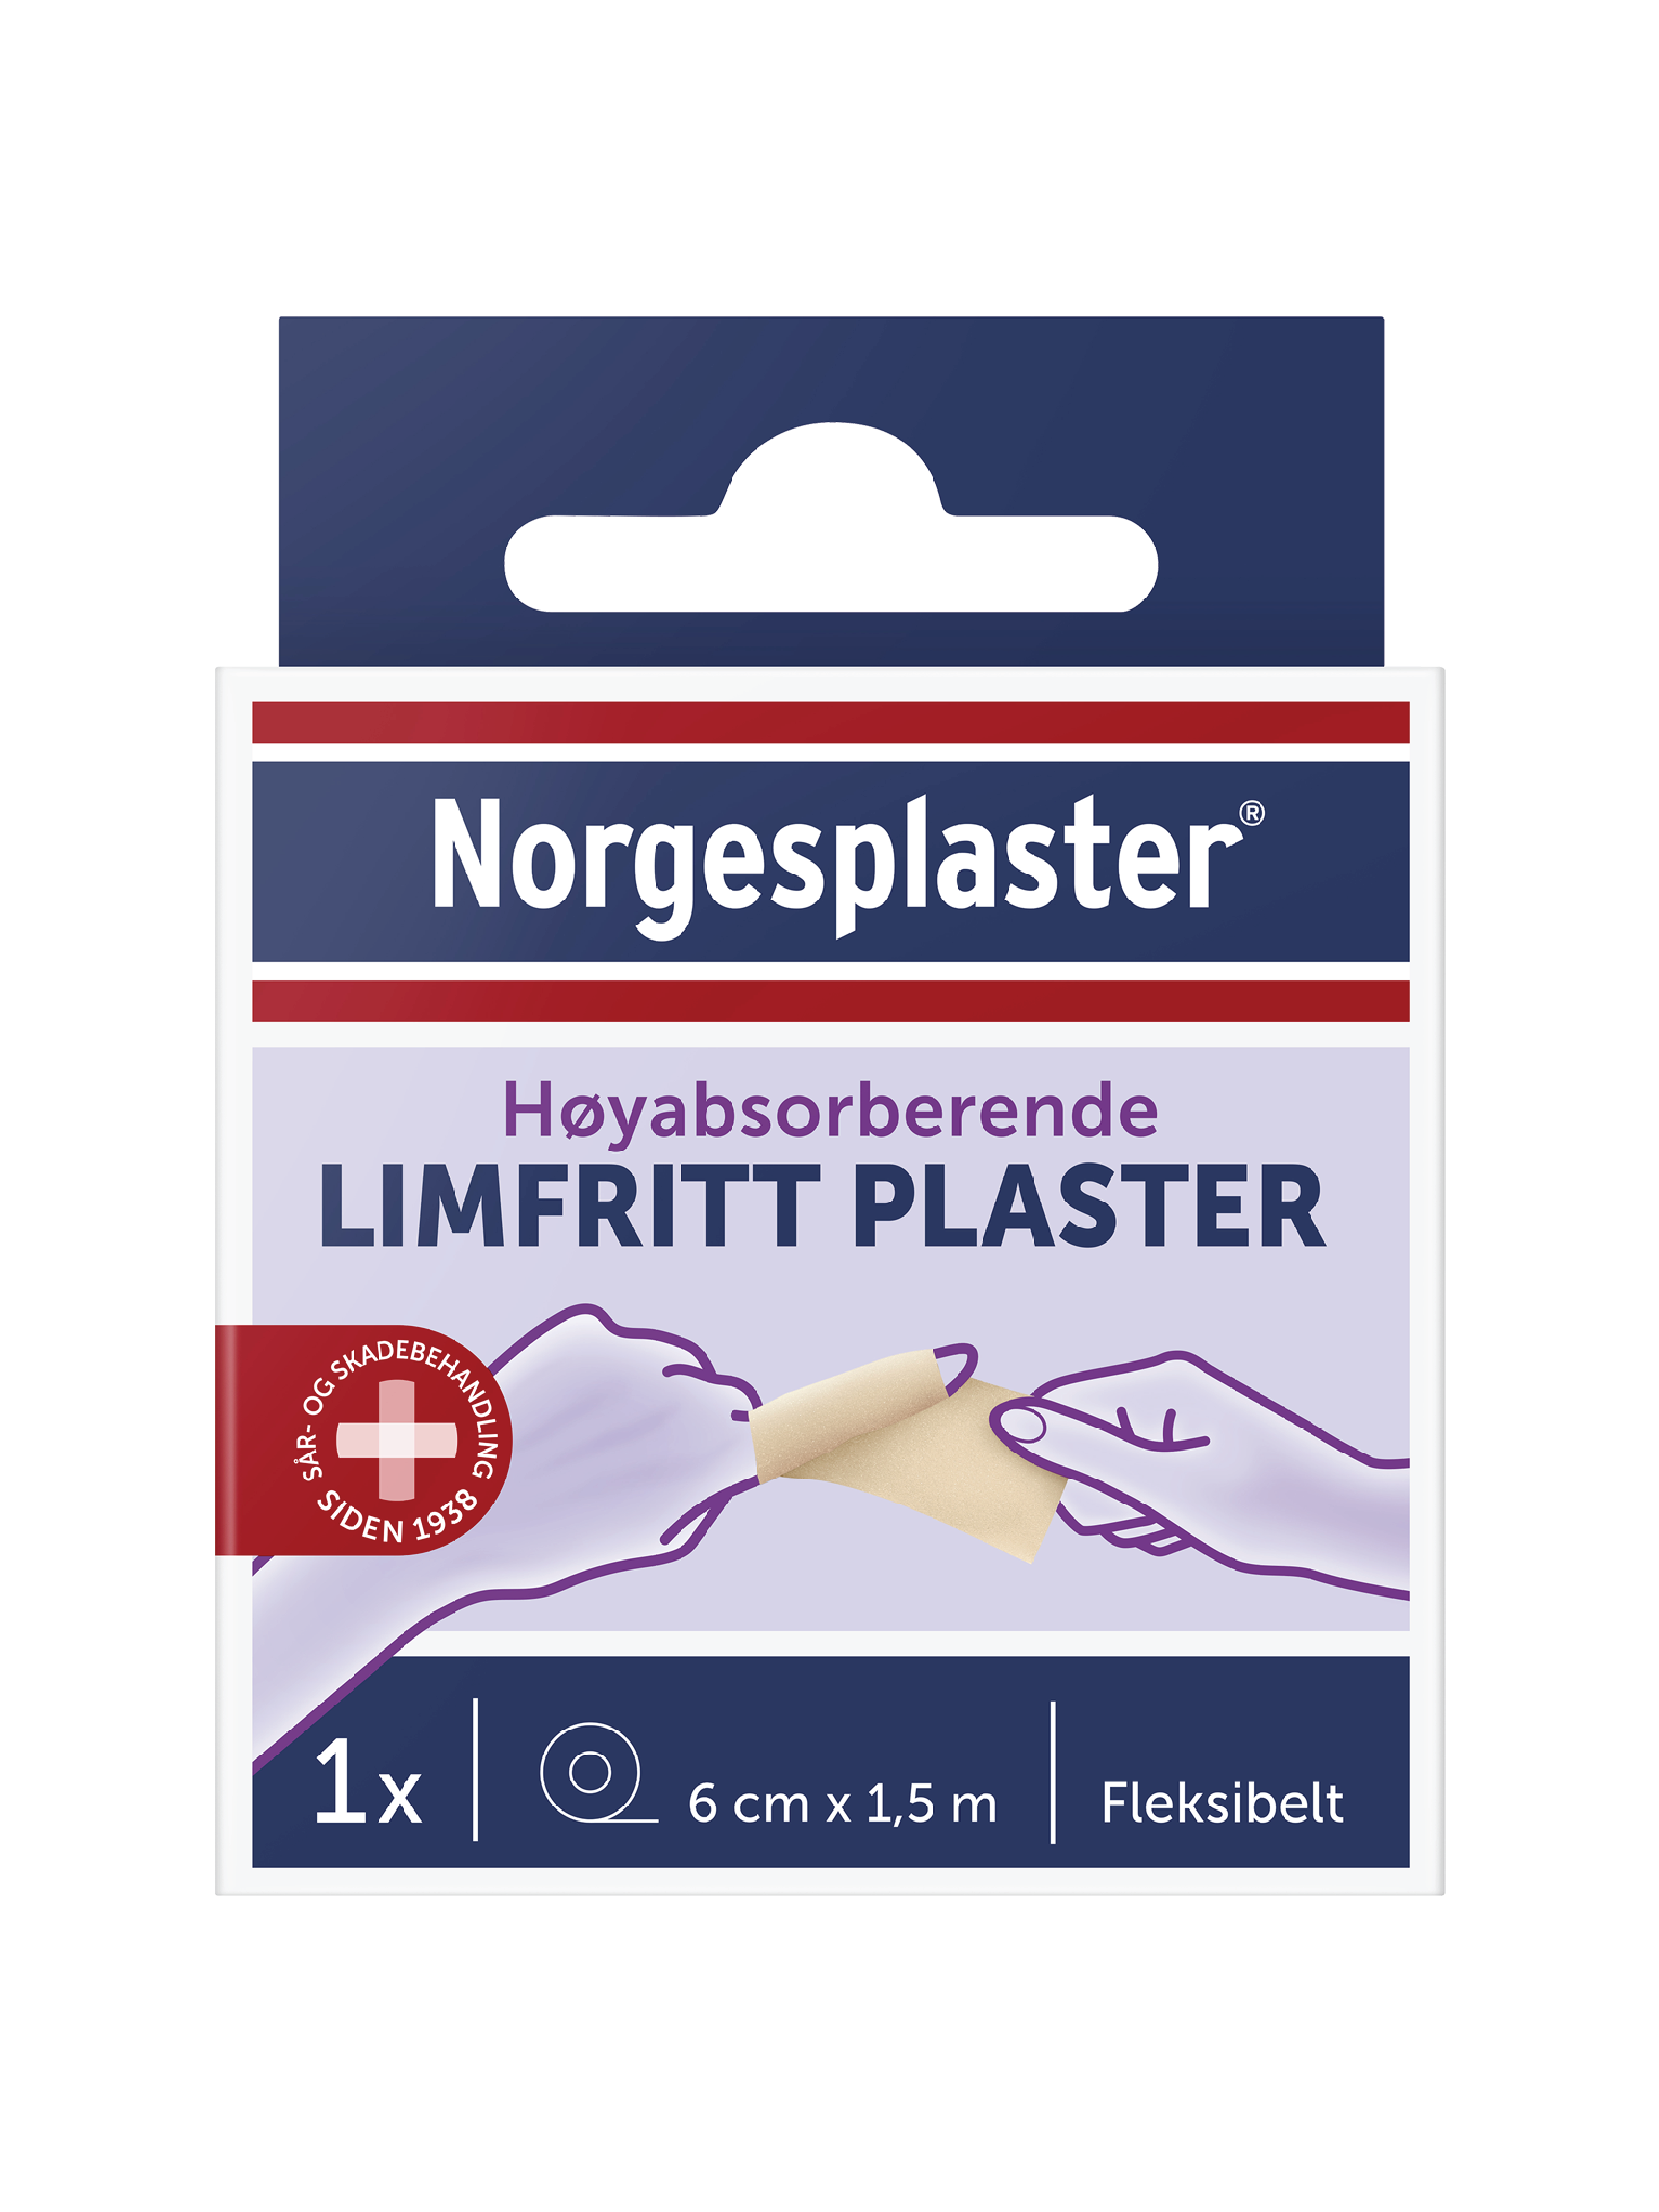 Norgesplaster Limfritt plaster, 6 cm x 1,5 m, 1 stk.